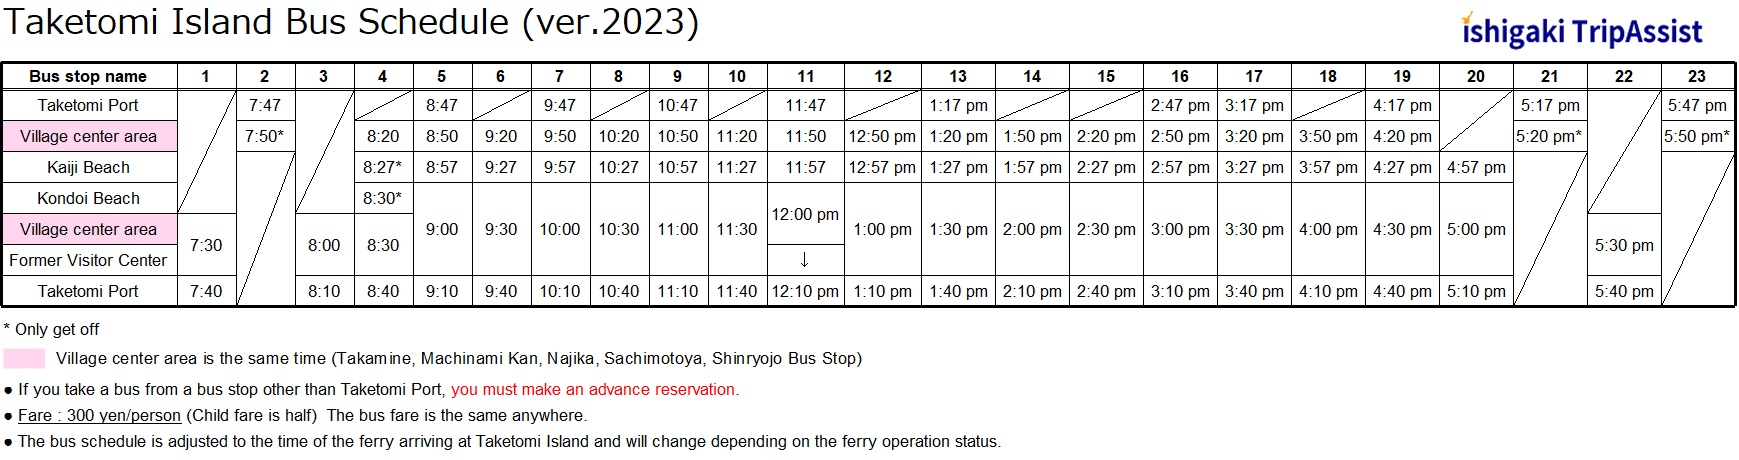 Taketomijima Bus Schedule